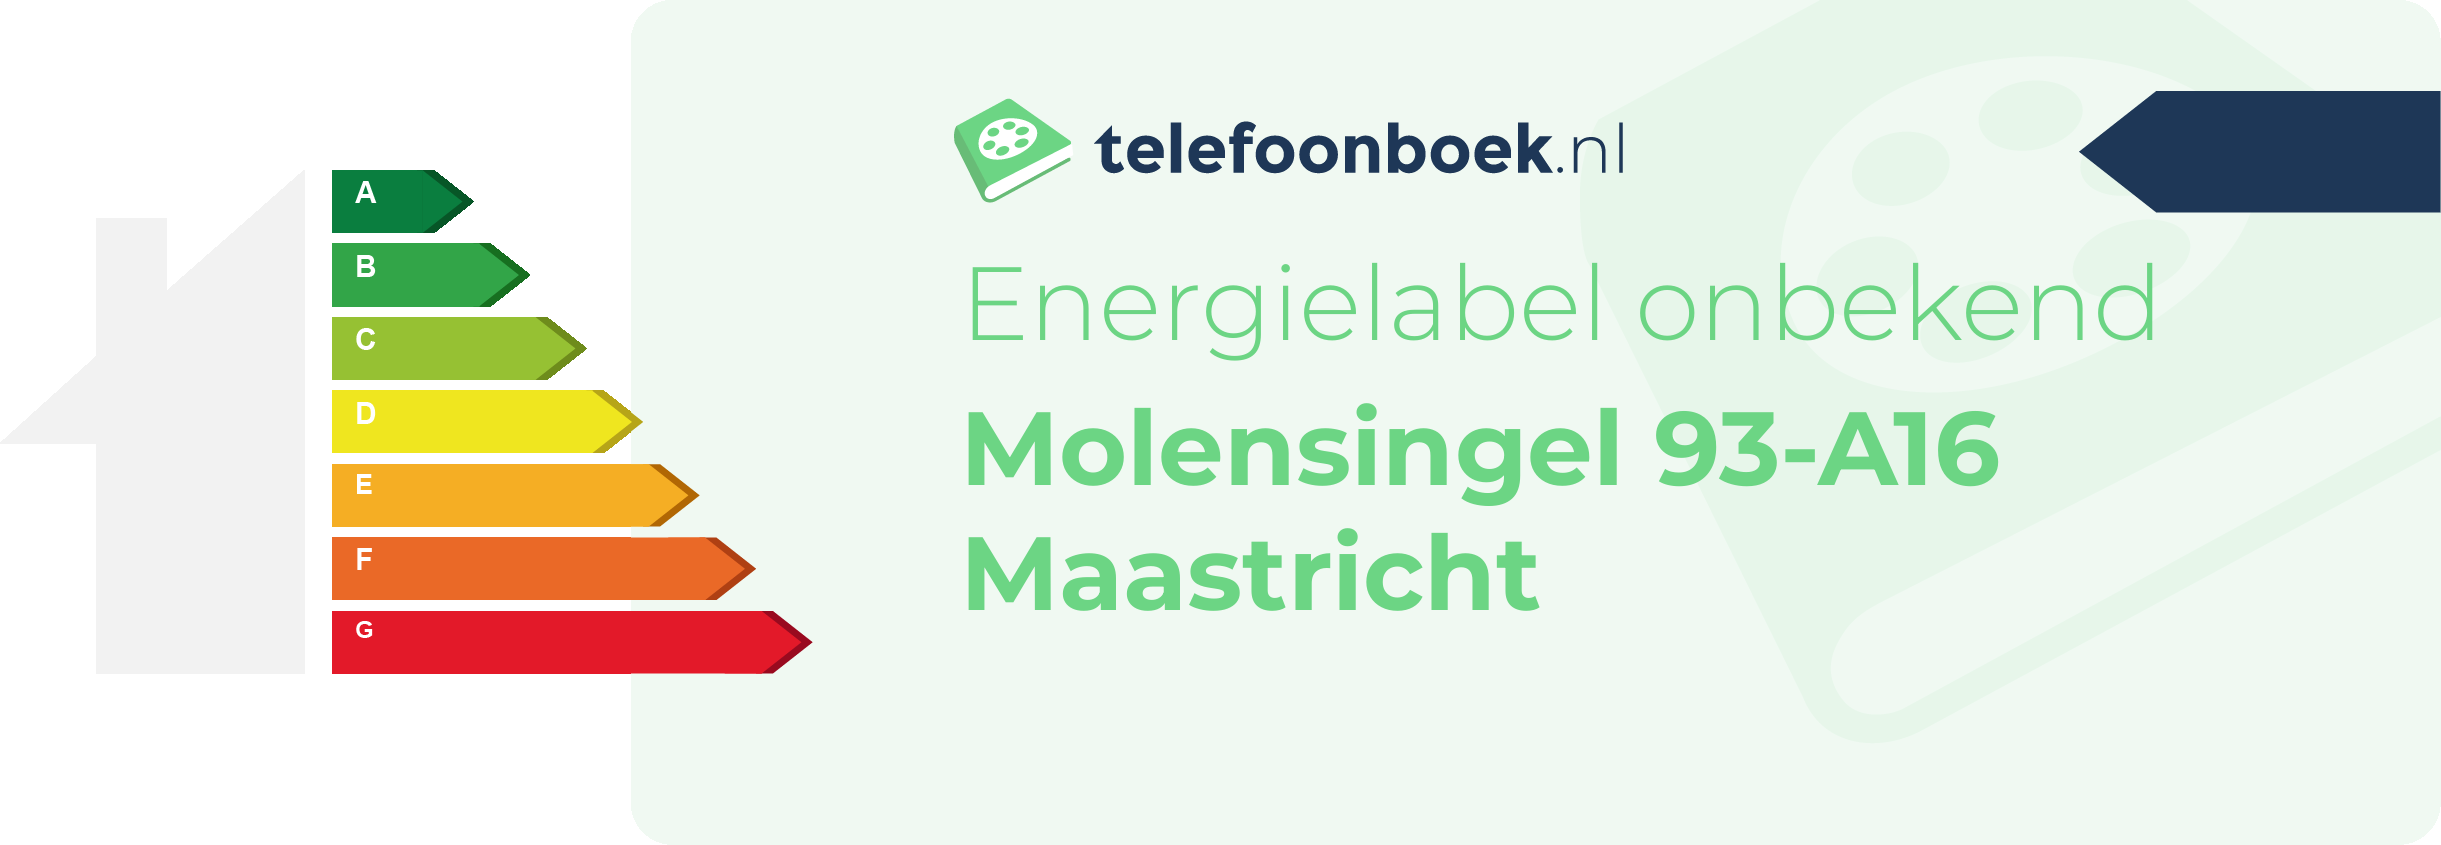 Energielabel Molensingel 93-A16 Maastricht